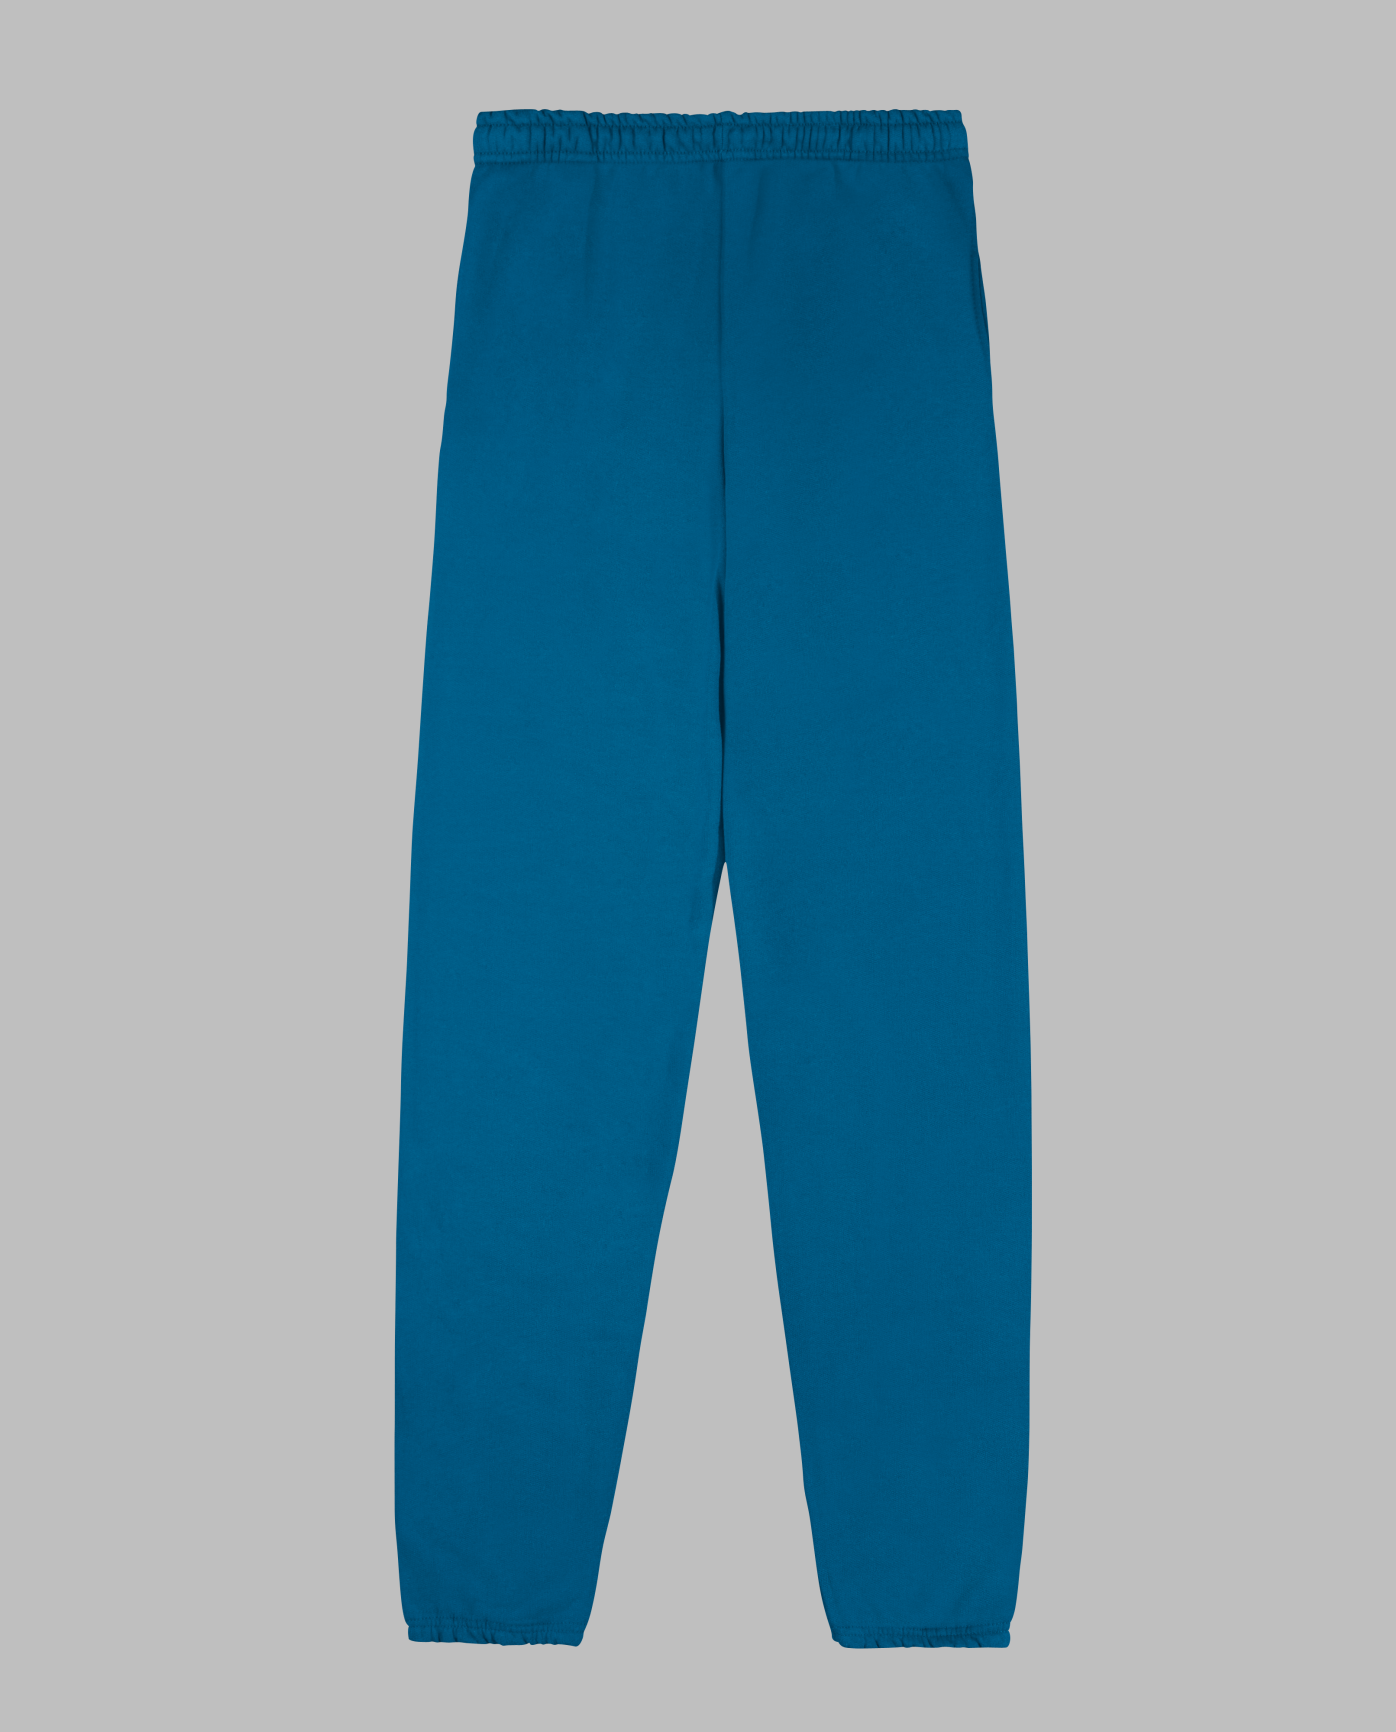 Cotton Navy Blue Track Pant, Size: S - XL